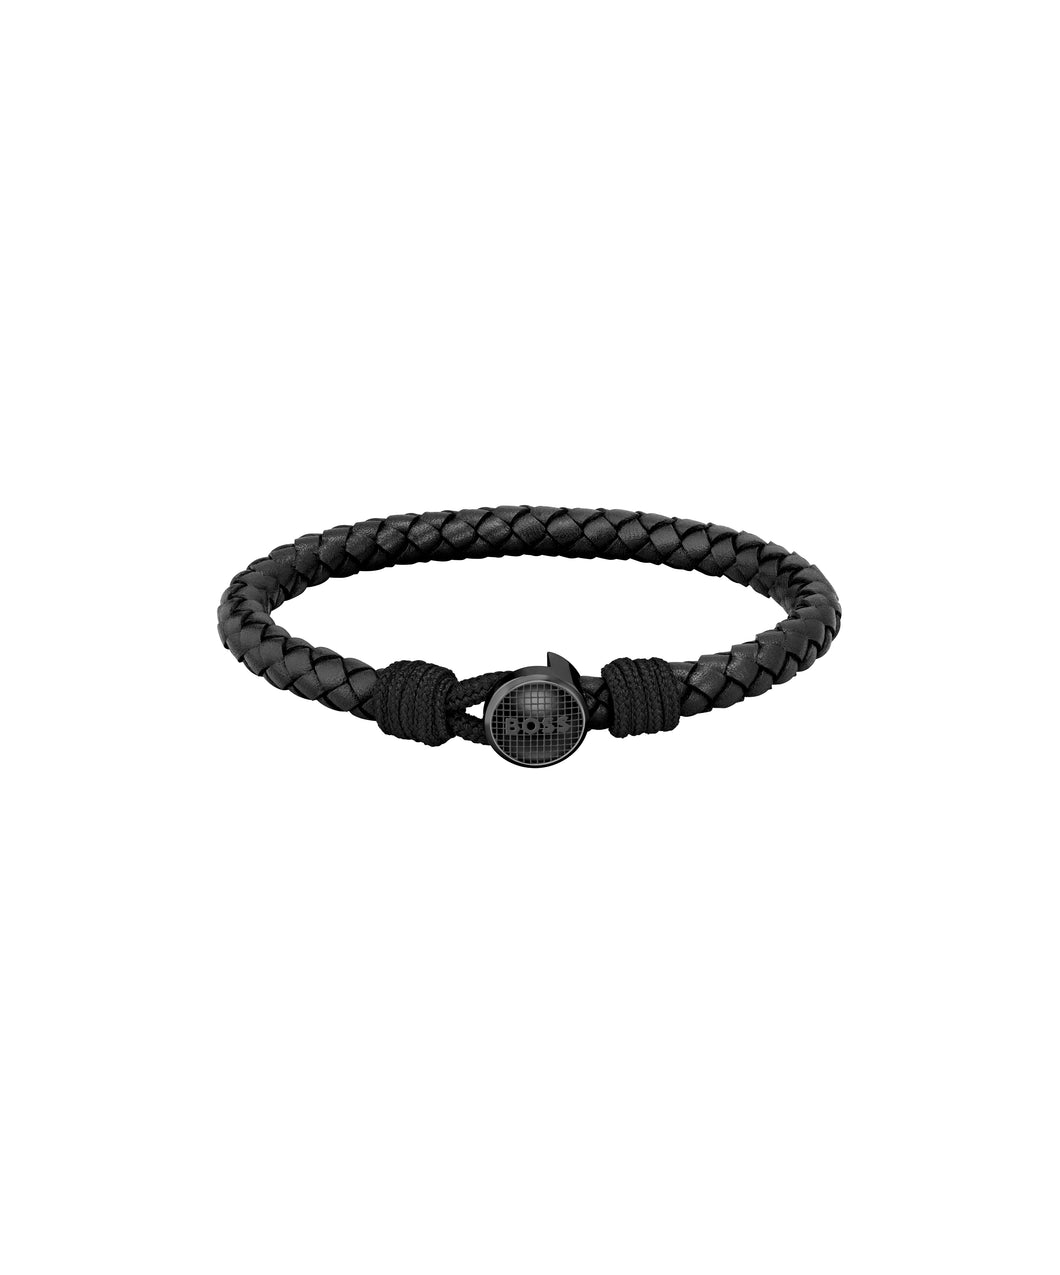 Gents BOSS Thad Classic Braided Black Leather Bracelet